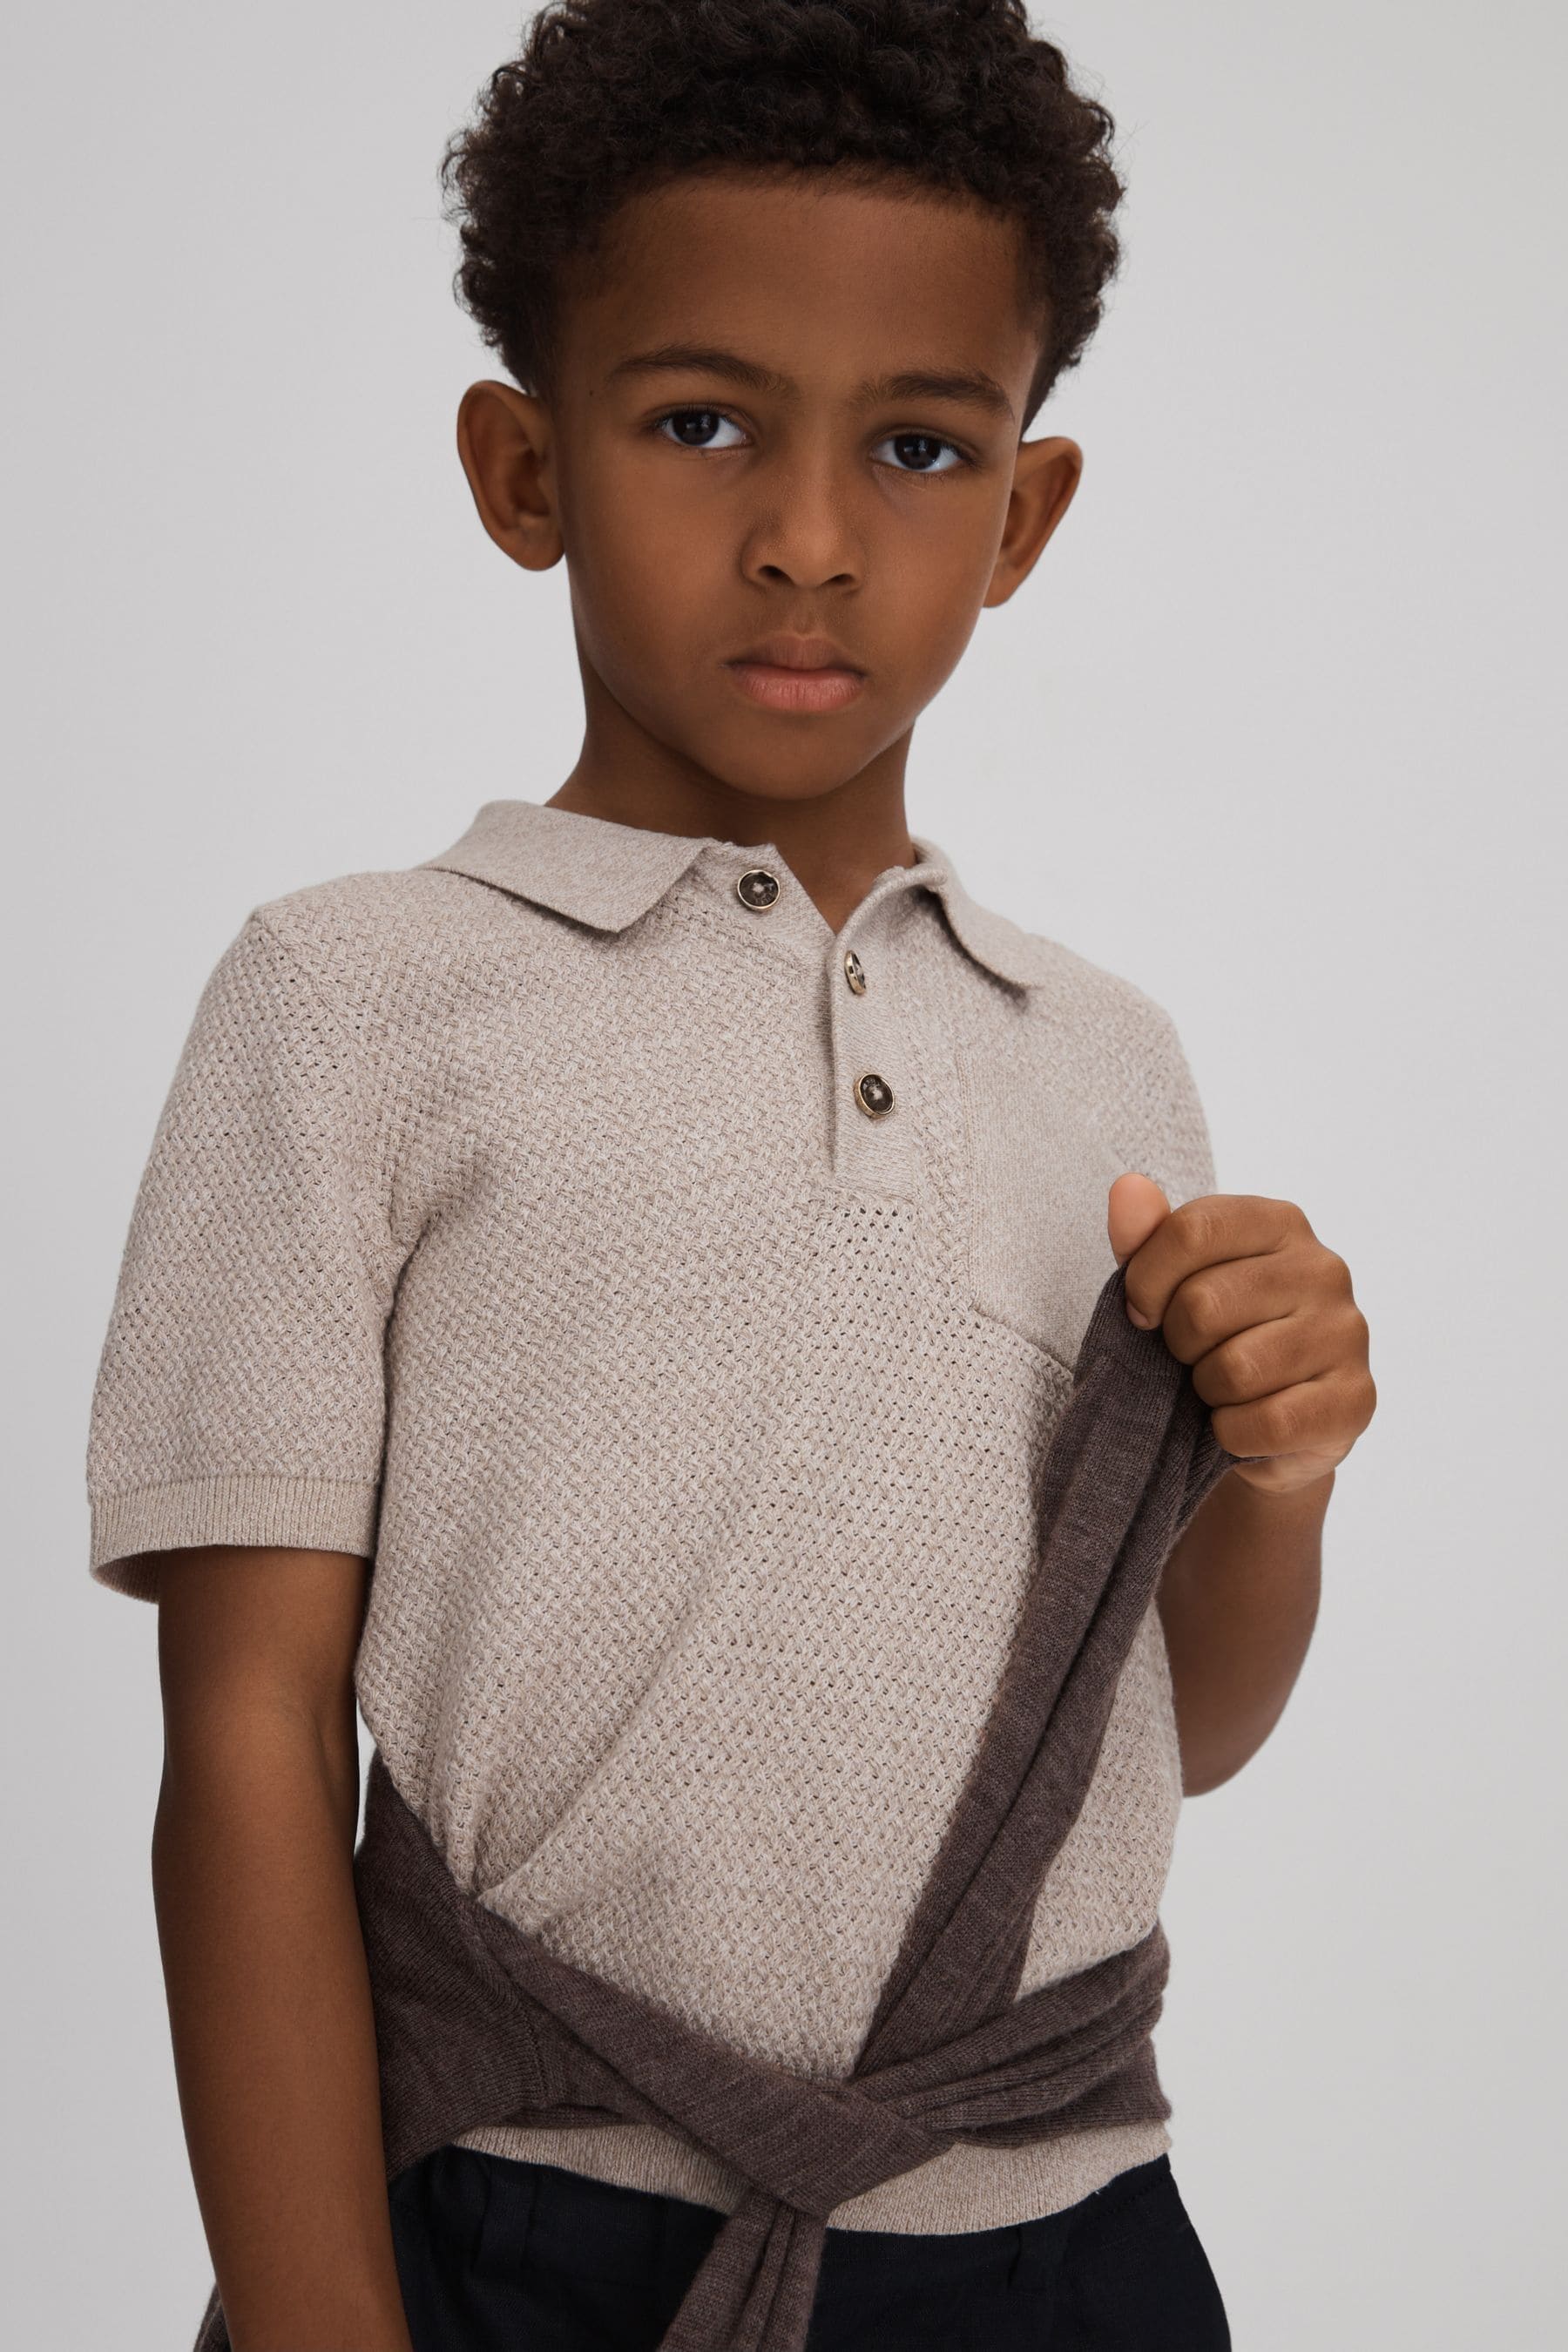 Reiss Demetri - Oatmeal Melange Textured Cotton Polo Shirt, Uk 12-13 Yrs